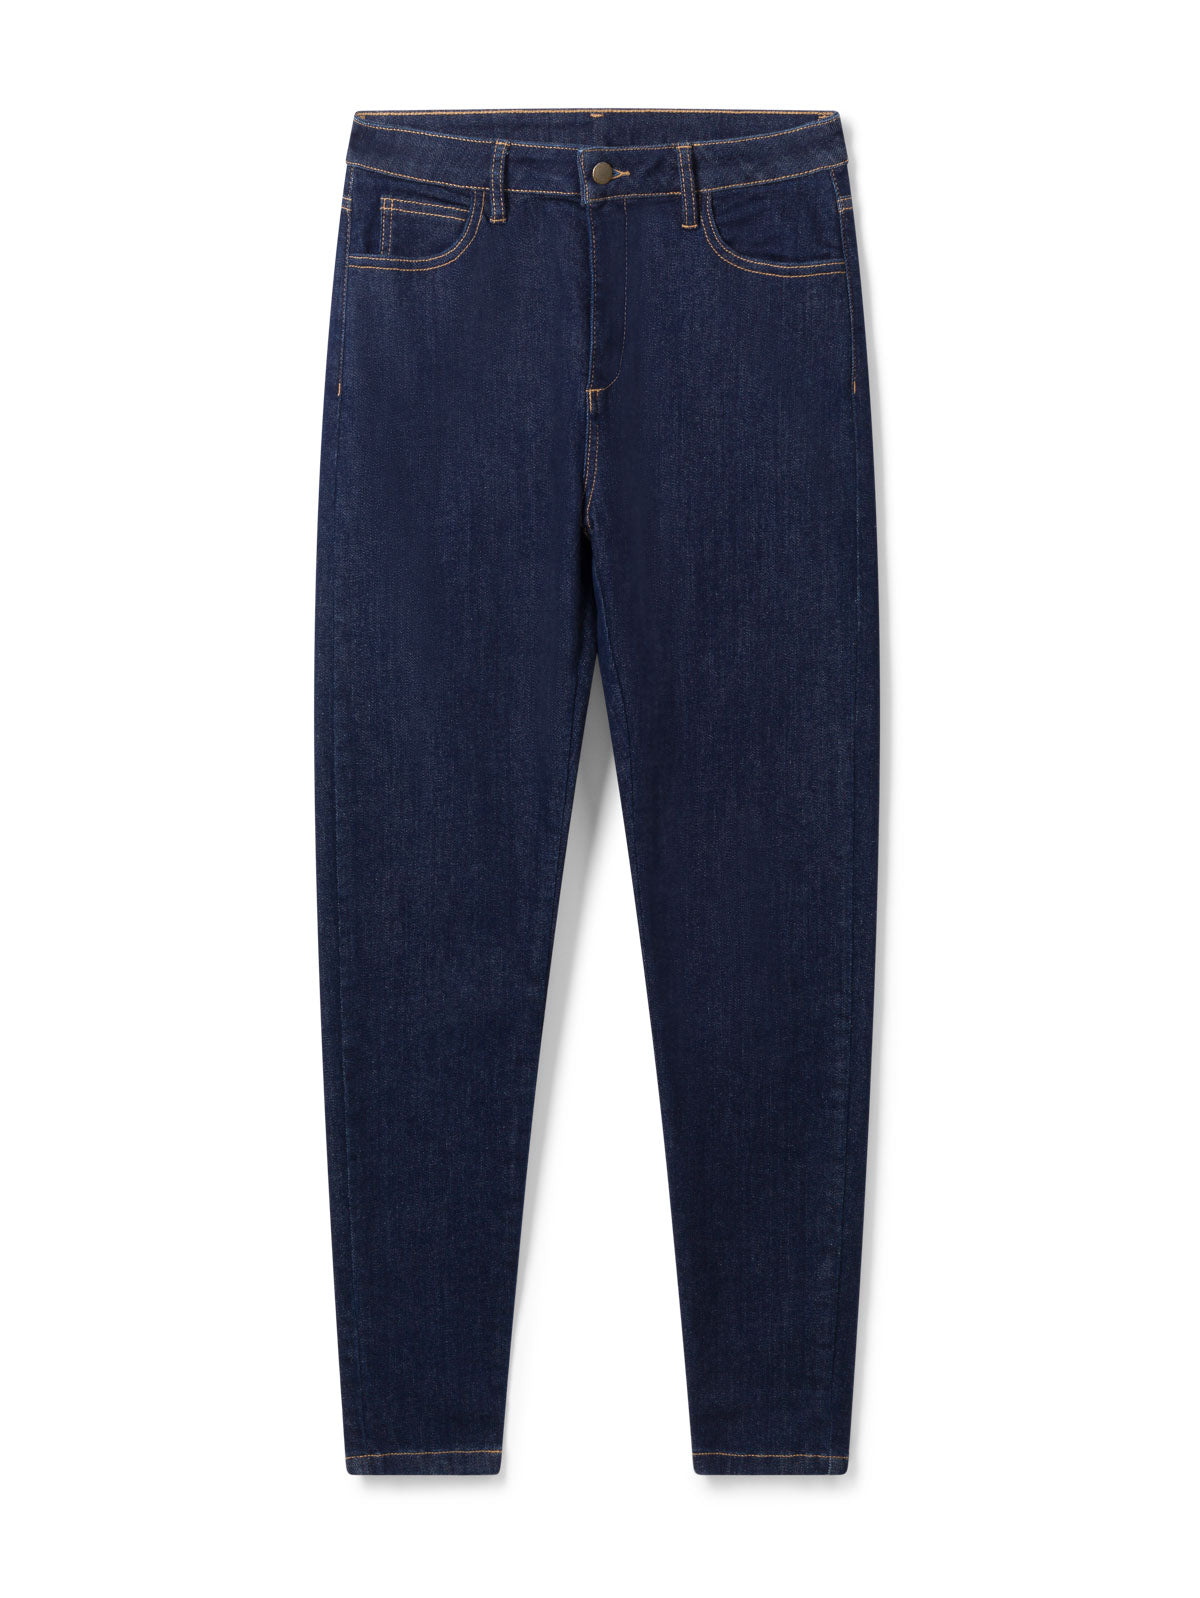 Essential Organic Cotton Skinny Jeans - Dark Indigo Blue